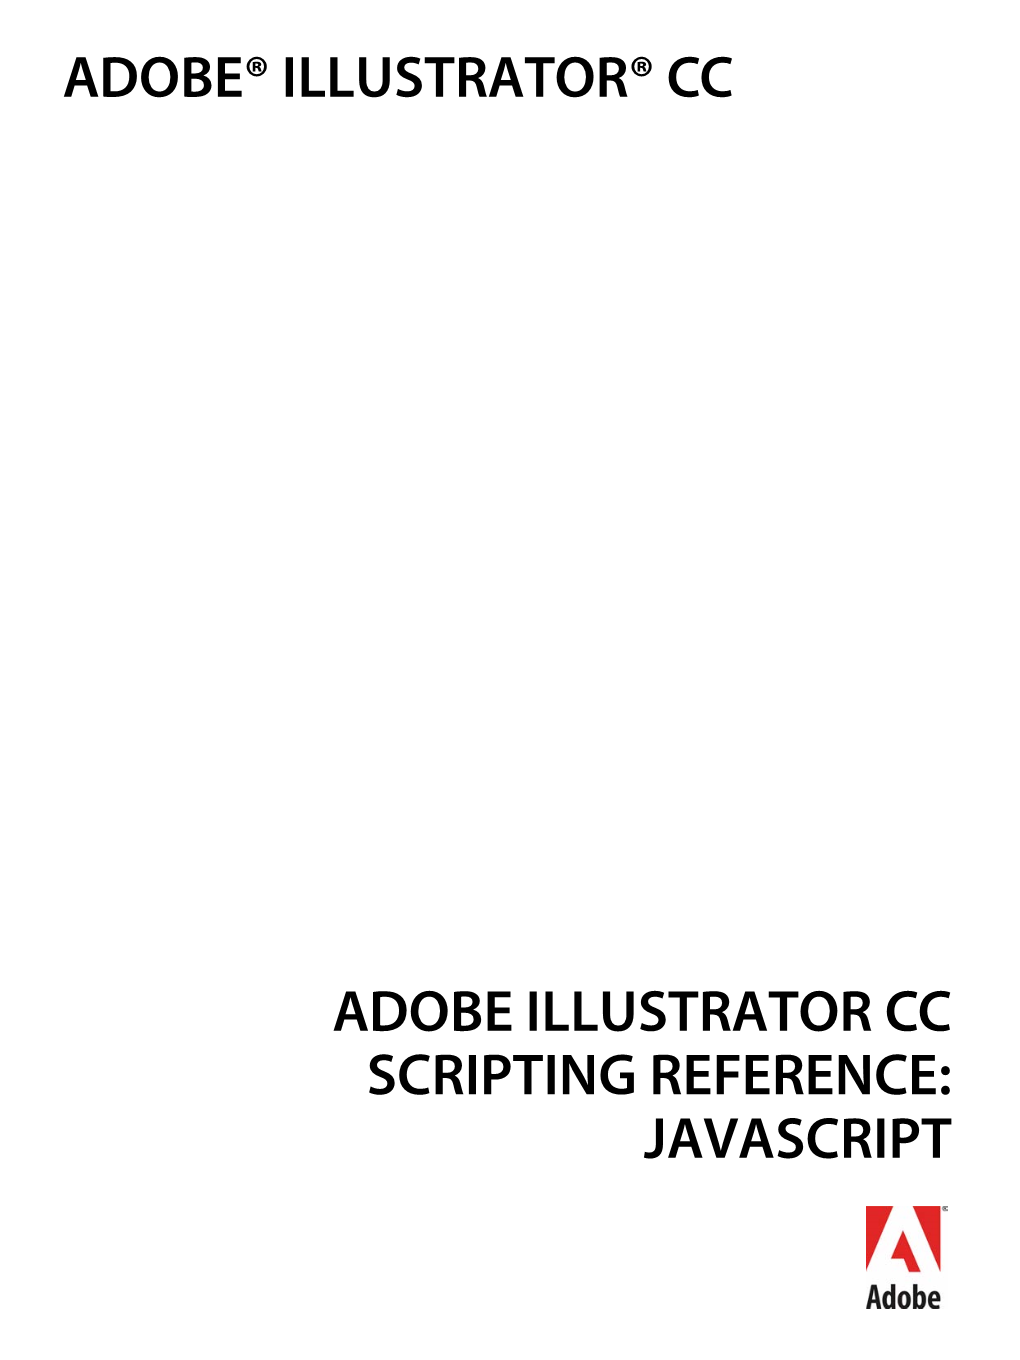 ADOBE ILLUSTRATOR CC SCRIPTING REFERENCE: JAVASCRIPT © 2013 Adobe Systems Incorporated